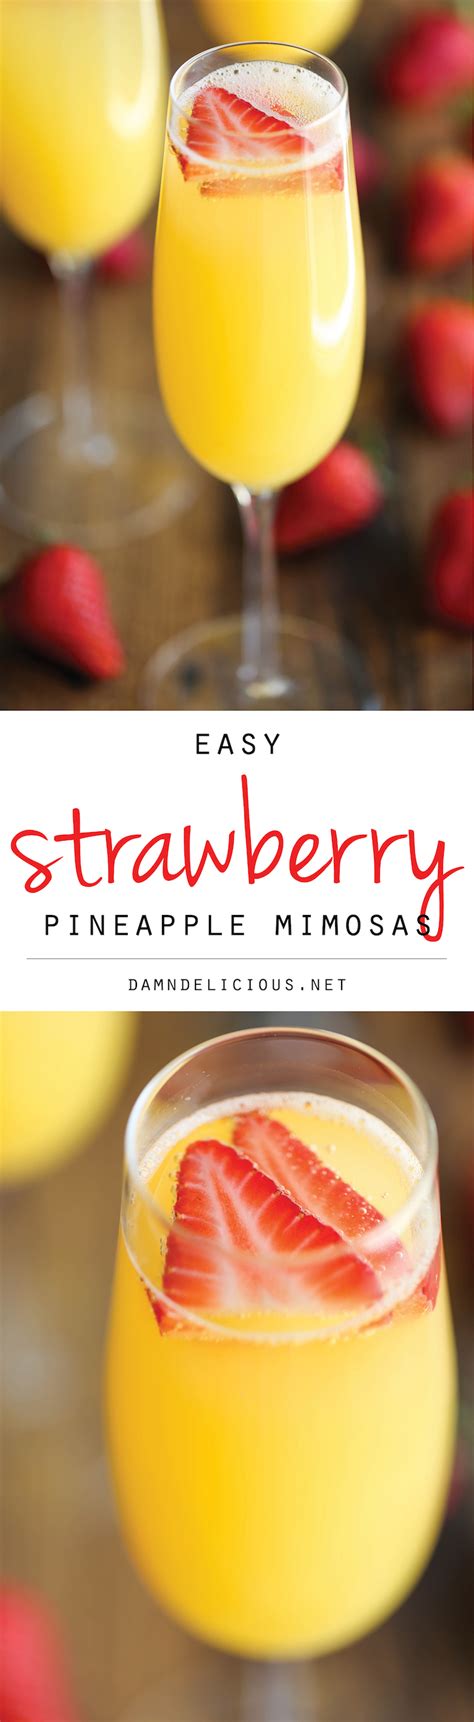 Strawberry Pineapple Mimosas Recipe Yummy Drinks Food Recipes